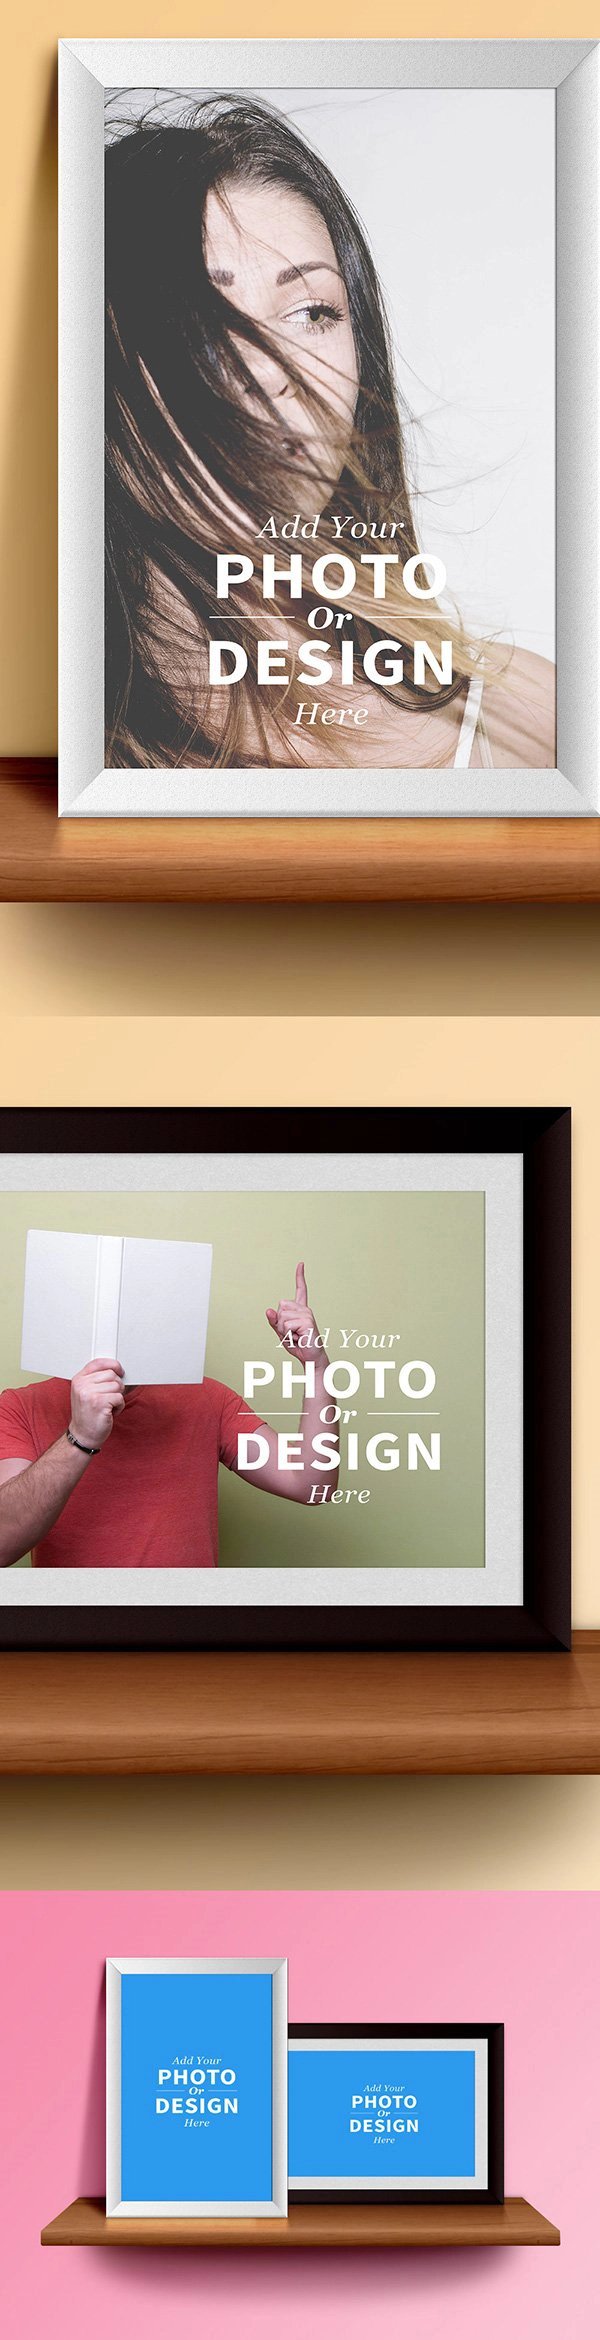 Photo Frames On The Shelf PSD